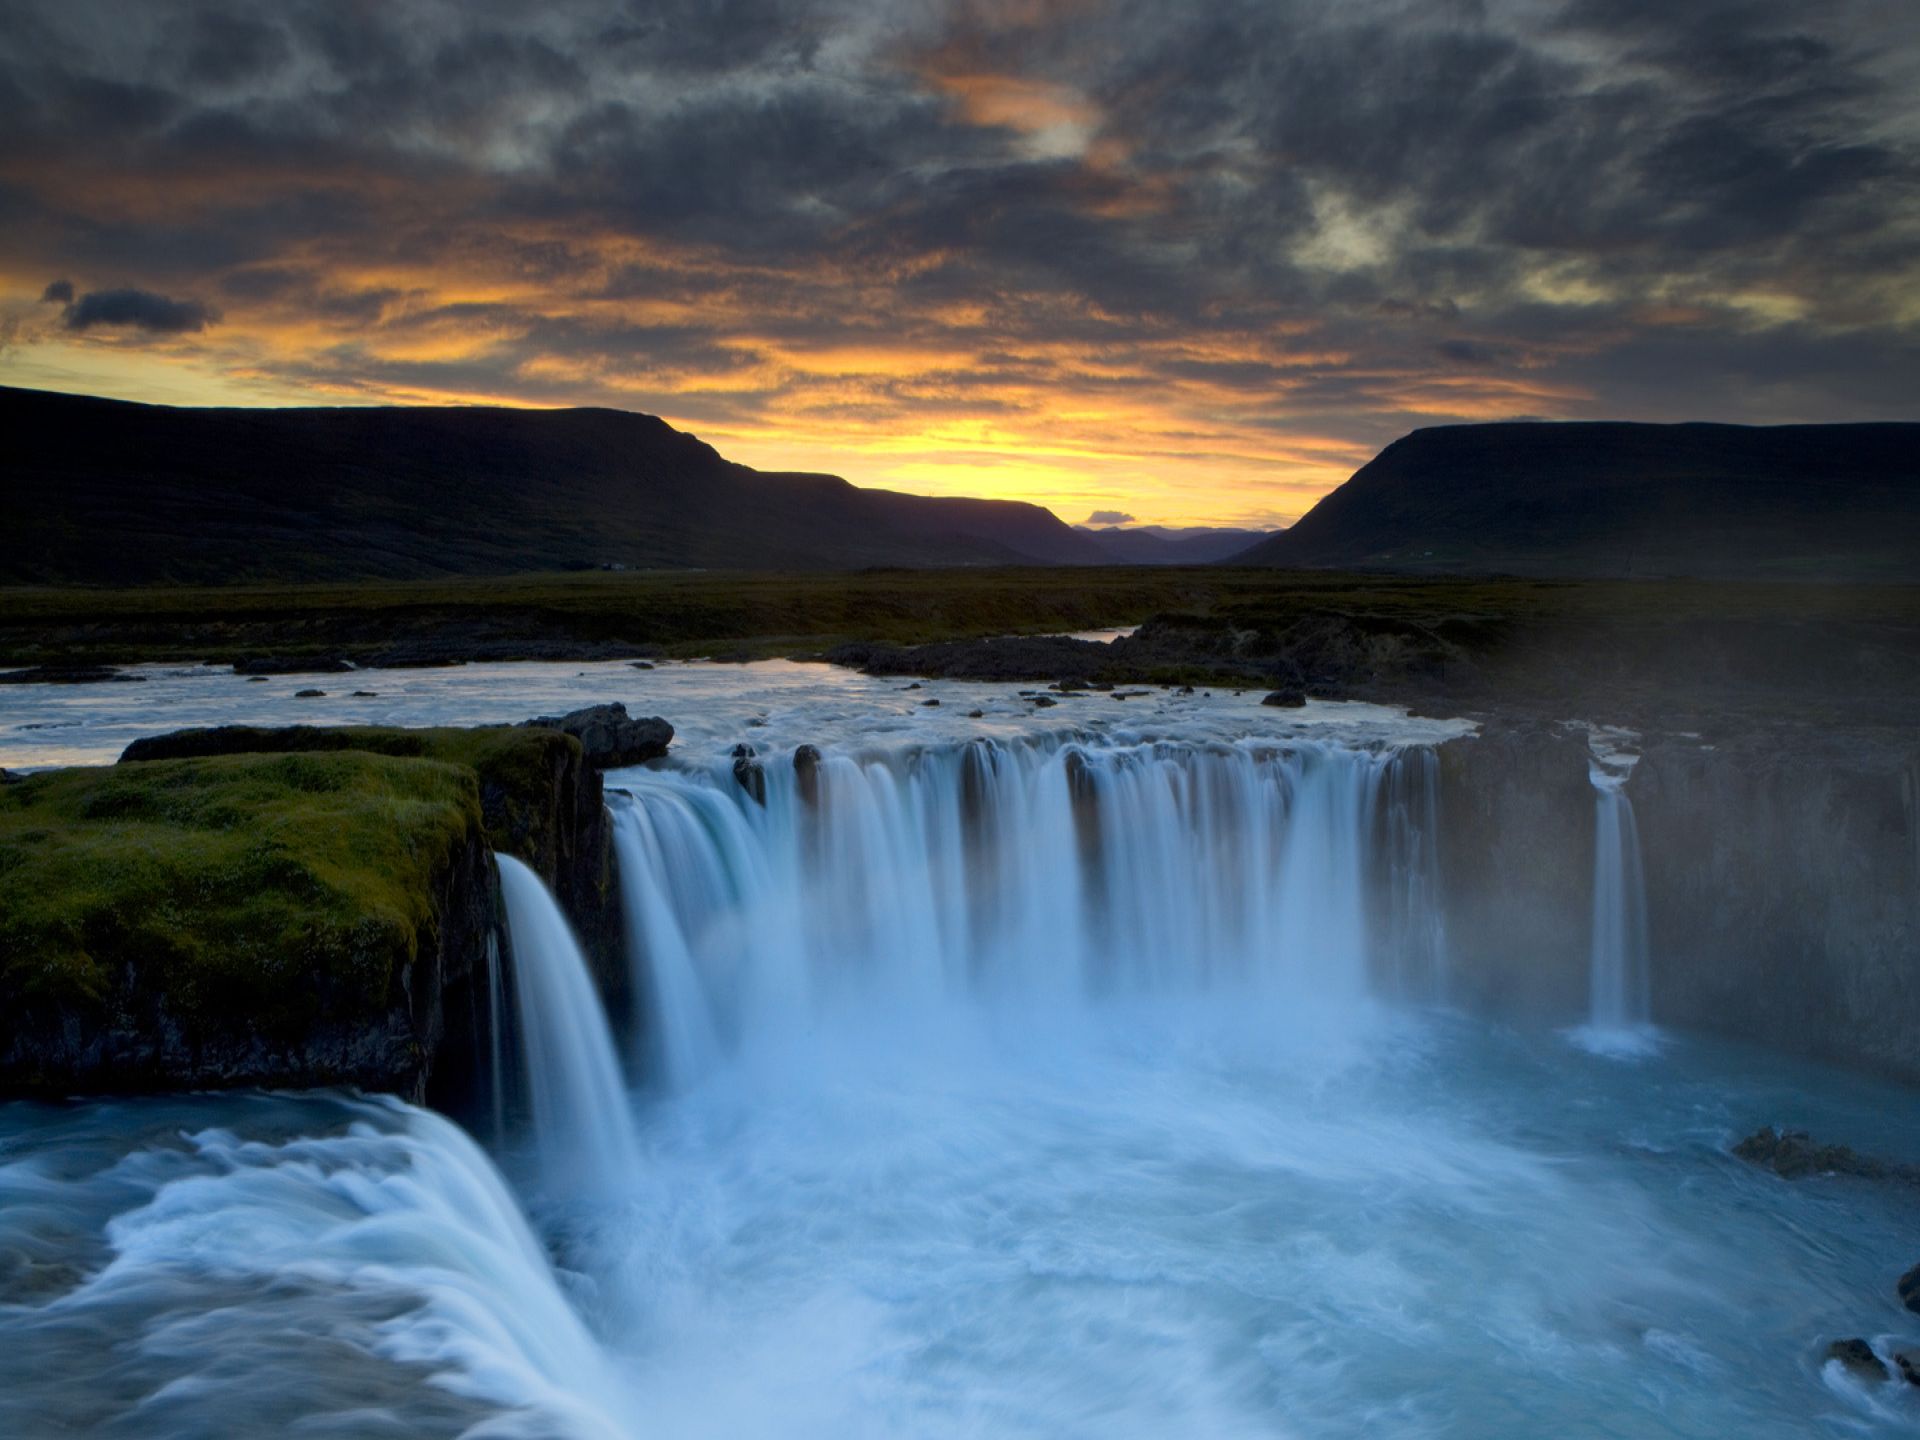 Большой водопад в европе. Водопад Деттифосс. Исландский водопад Деттифосс. Водопад Годафосс, Исландия. Деттифосс Исландия.